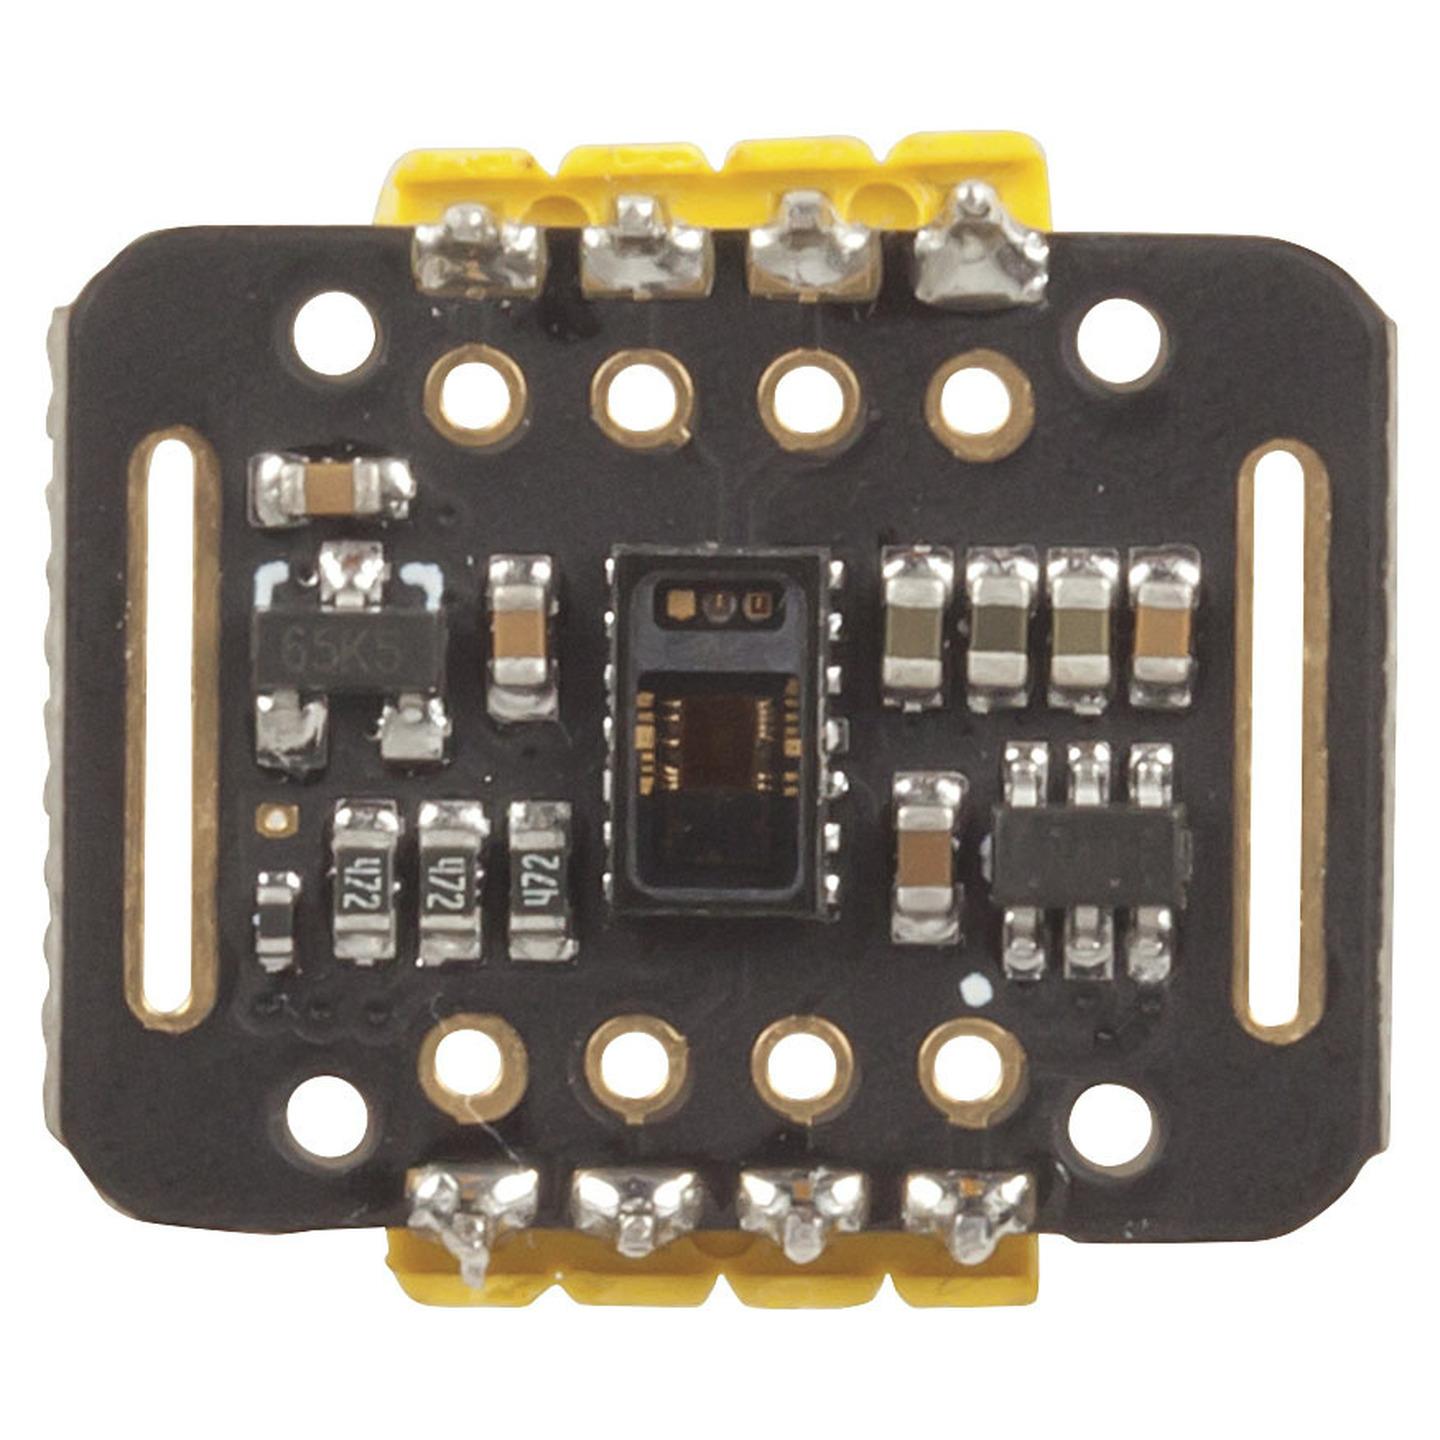 Heartbeat Sensor Module for Arduino 